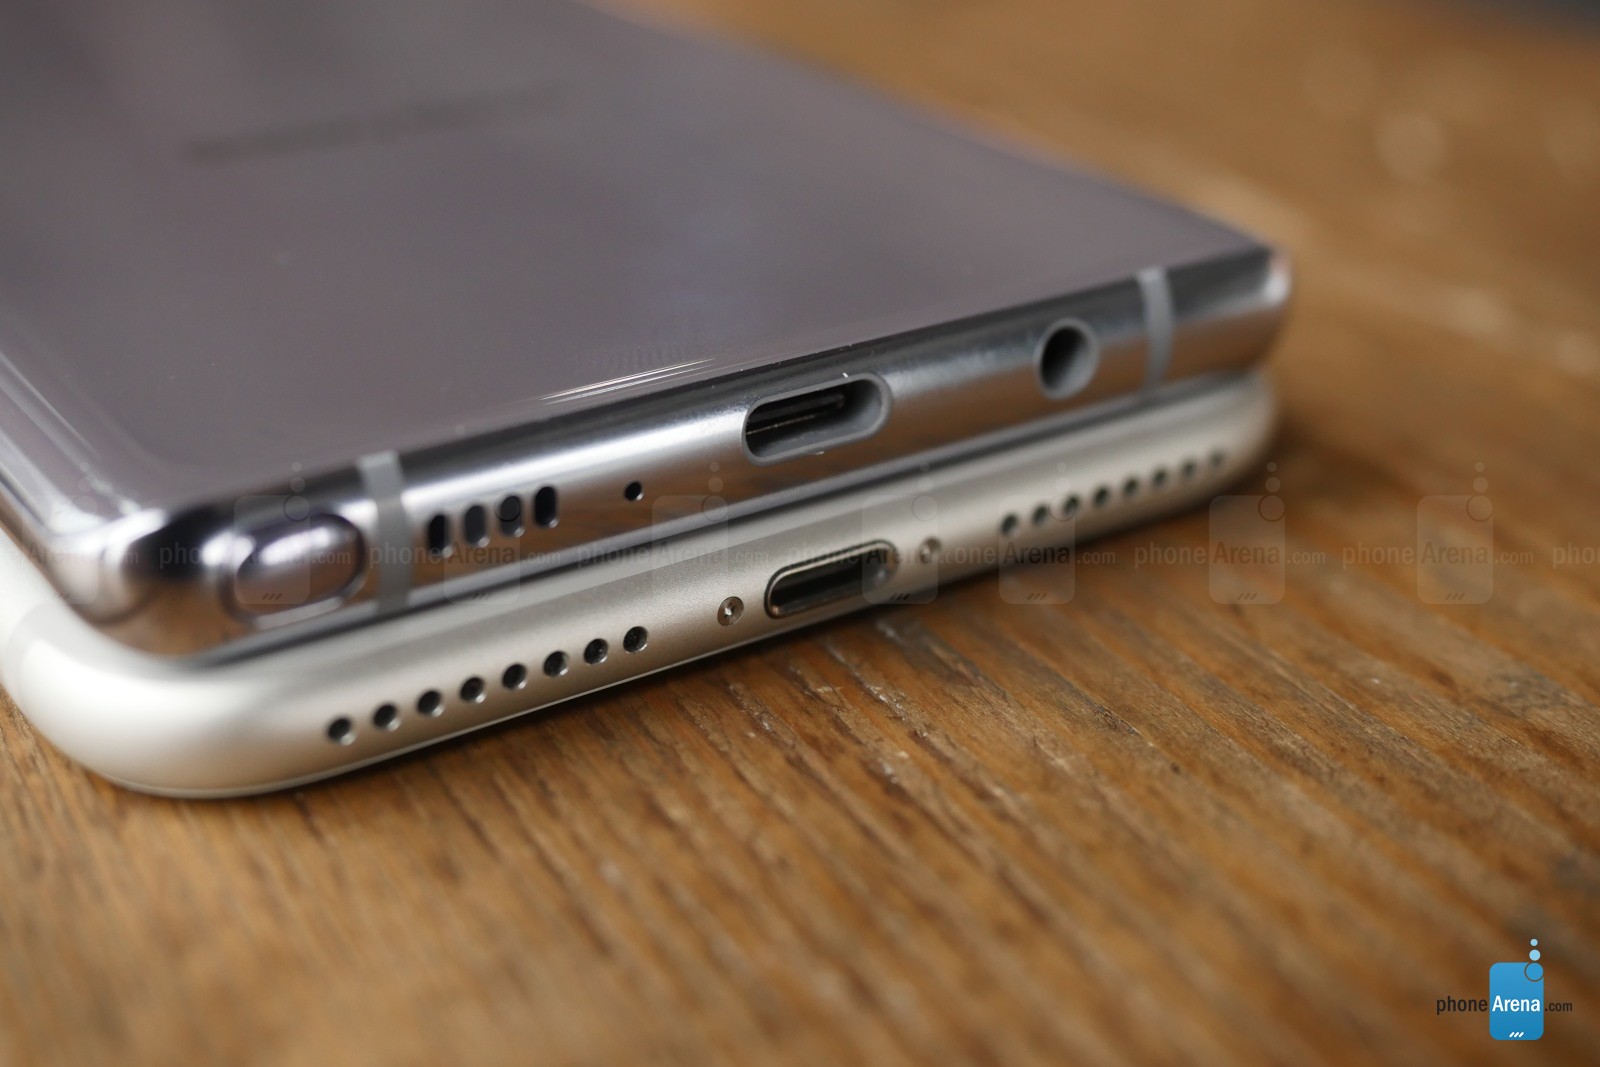 Samsung Galaxy Note 8 jämförelse iPhone 7 Plus 4